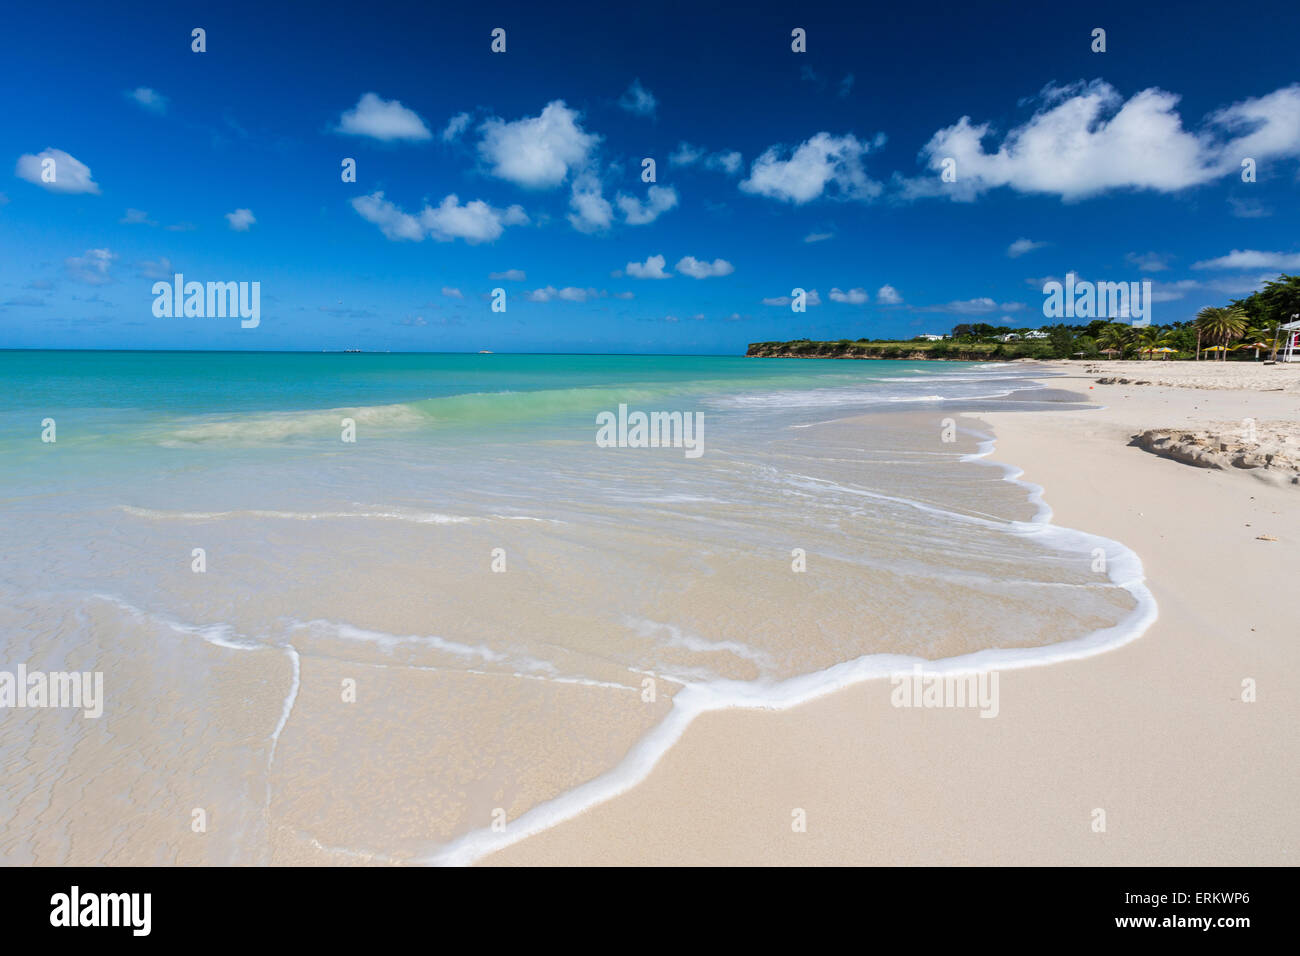 The waves of the Caribbean Sea crashing on the white sandy beach of Runaway Bay, north of the capital St. John's, Antigua Stock Photo